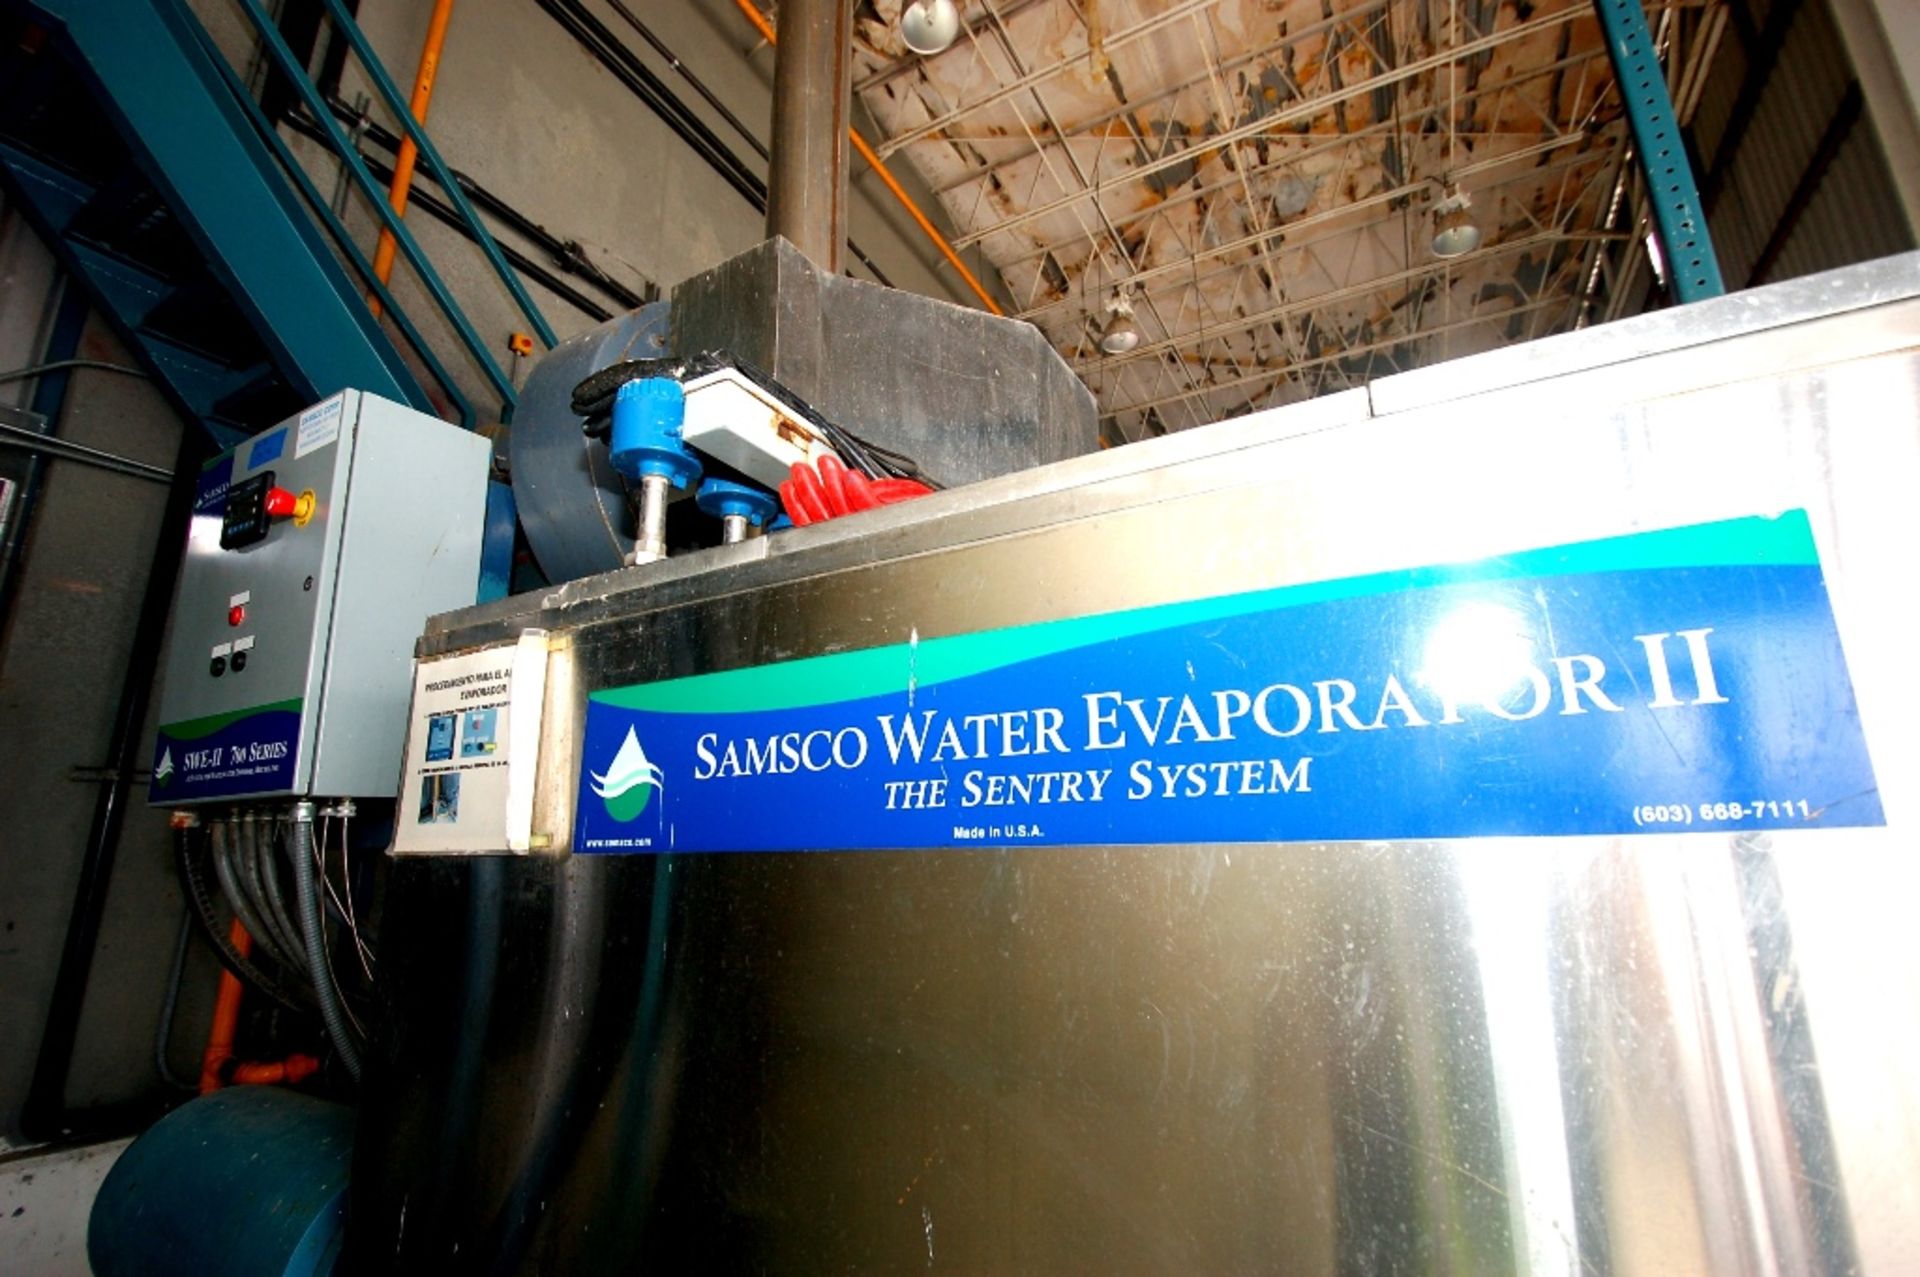 Samsco Water Evaporator II - Image 6 of 9